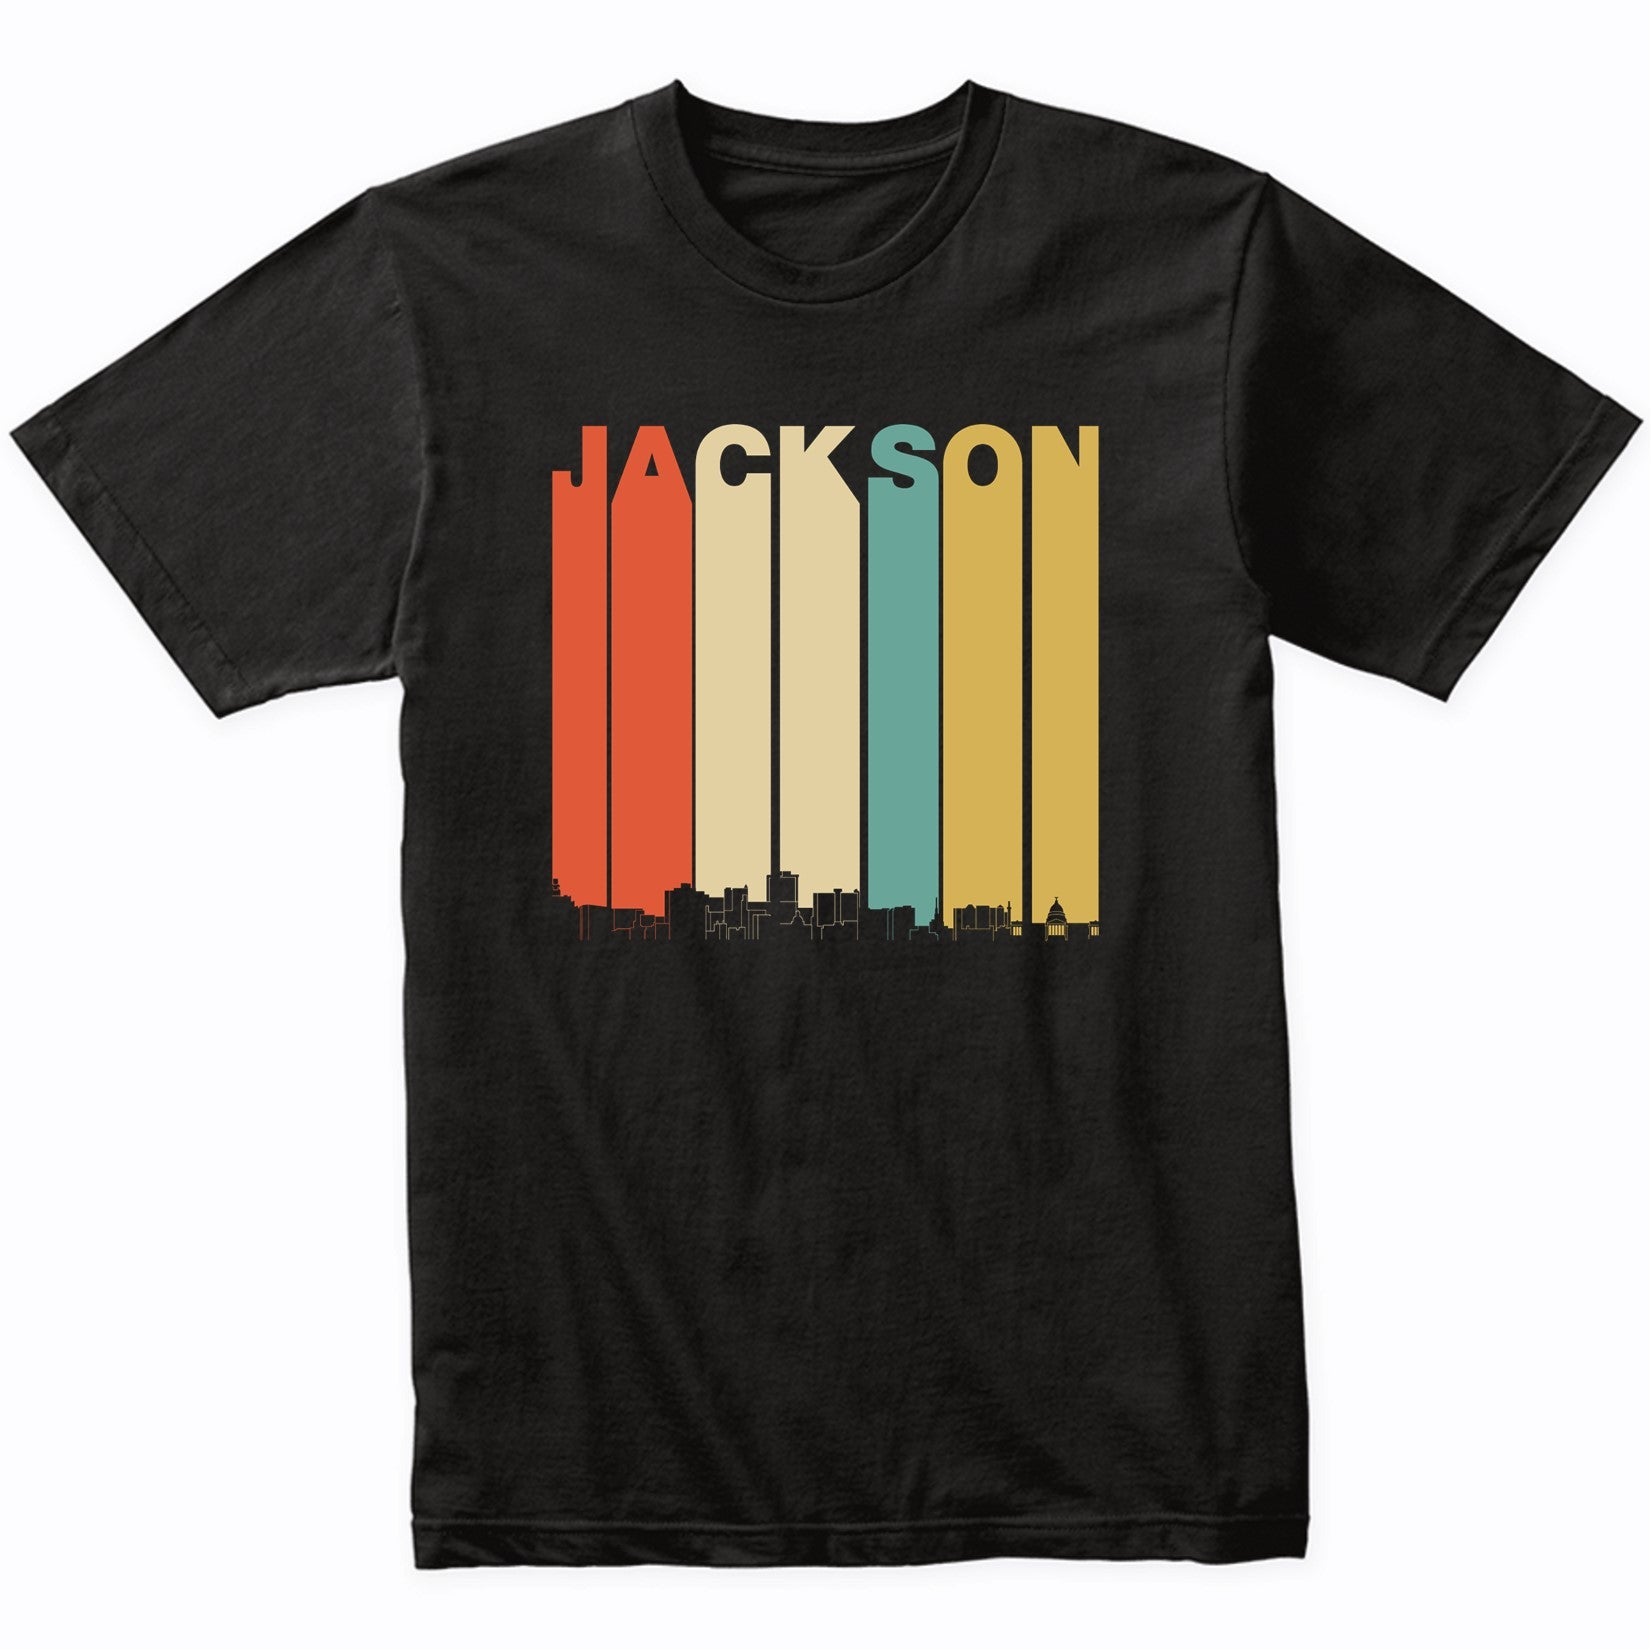 Vintage 1970's Style Jackson Mississippi Skyline T-Shirt